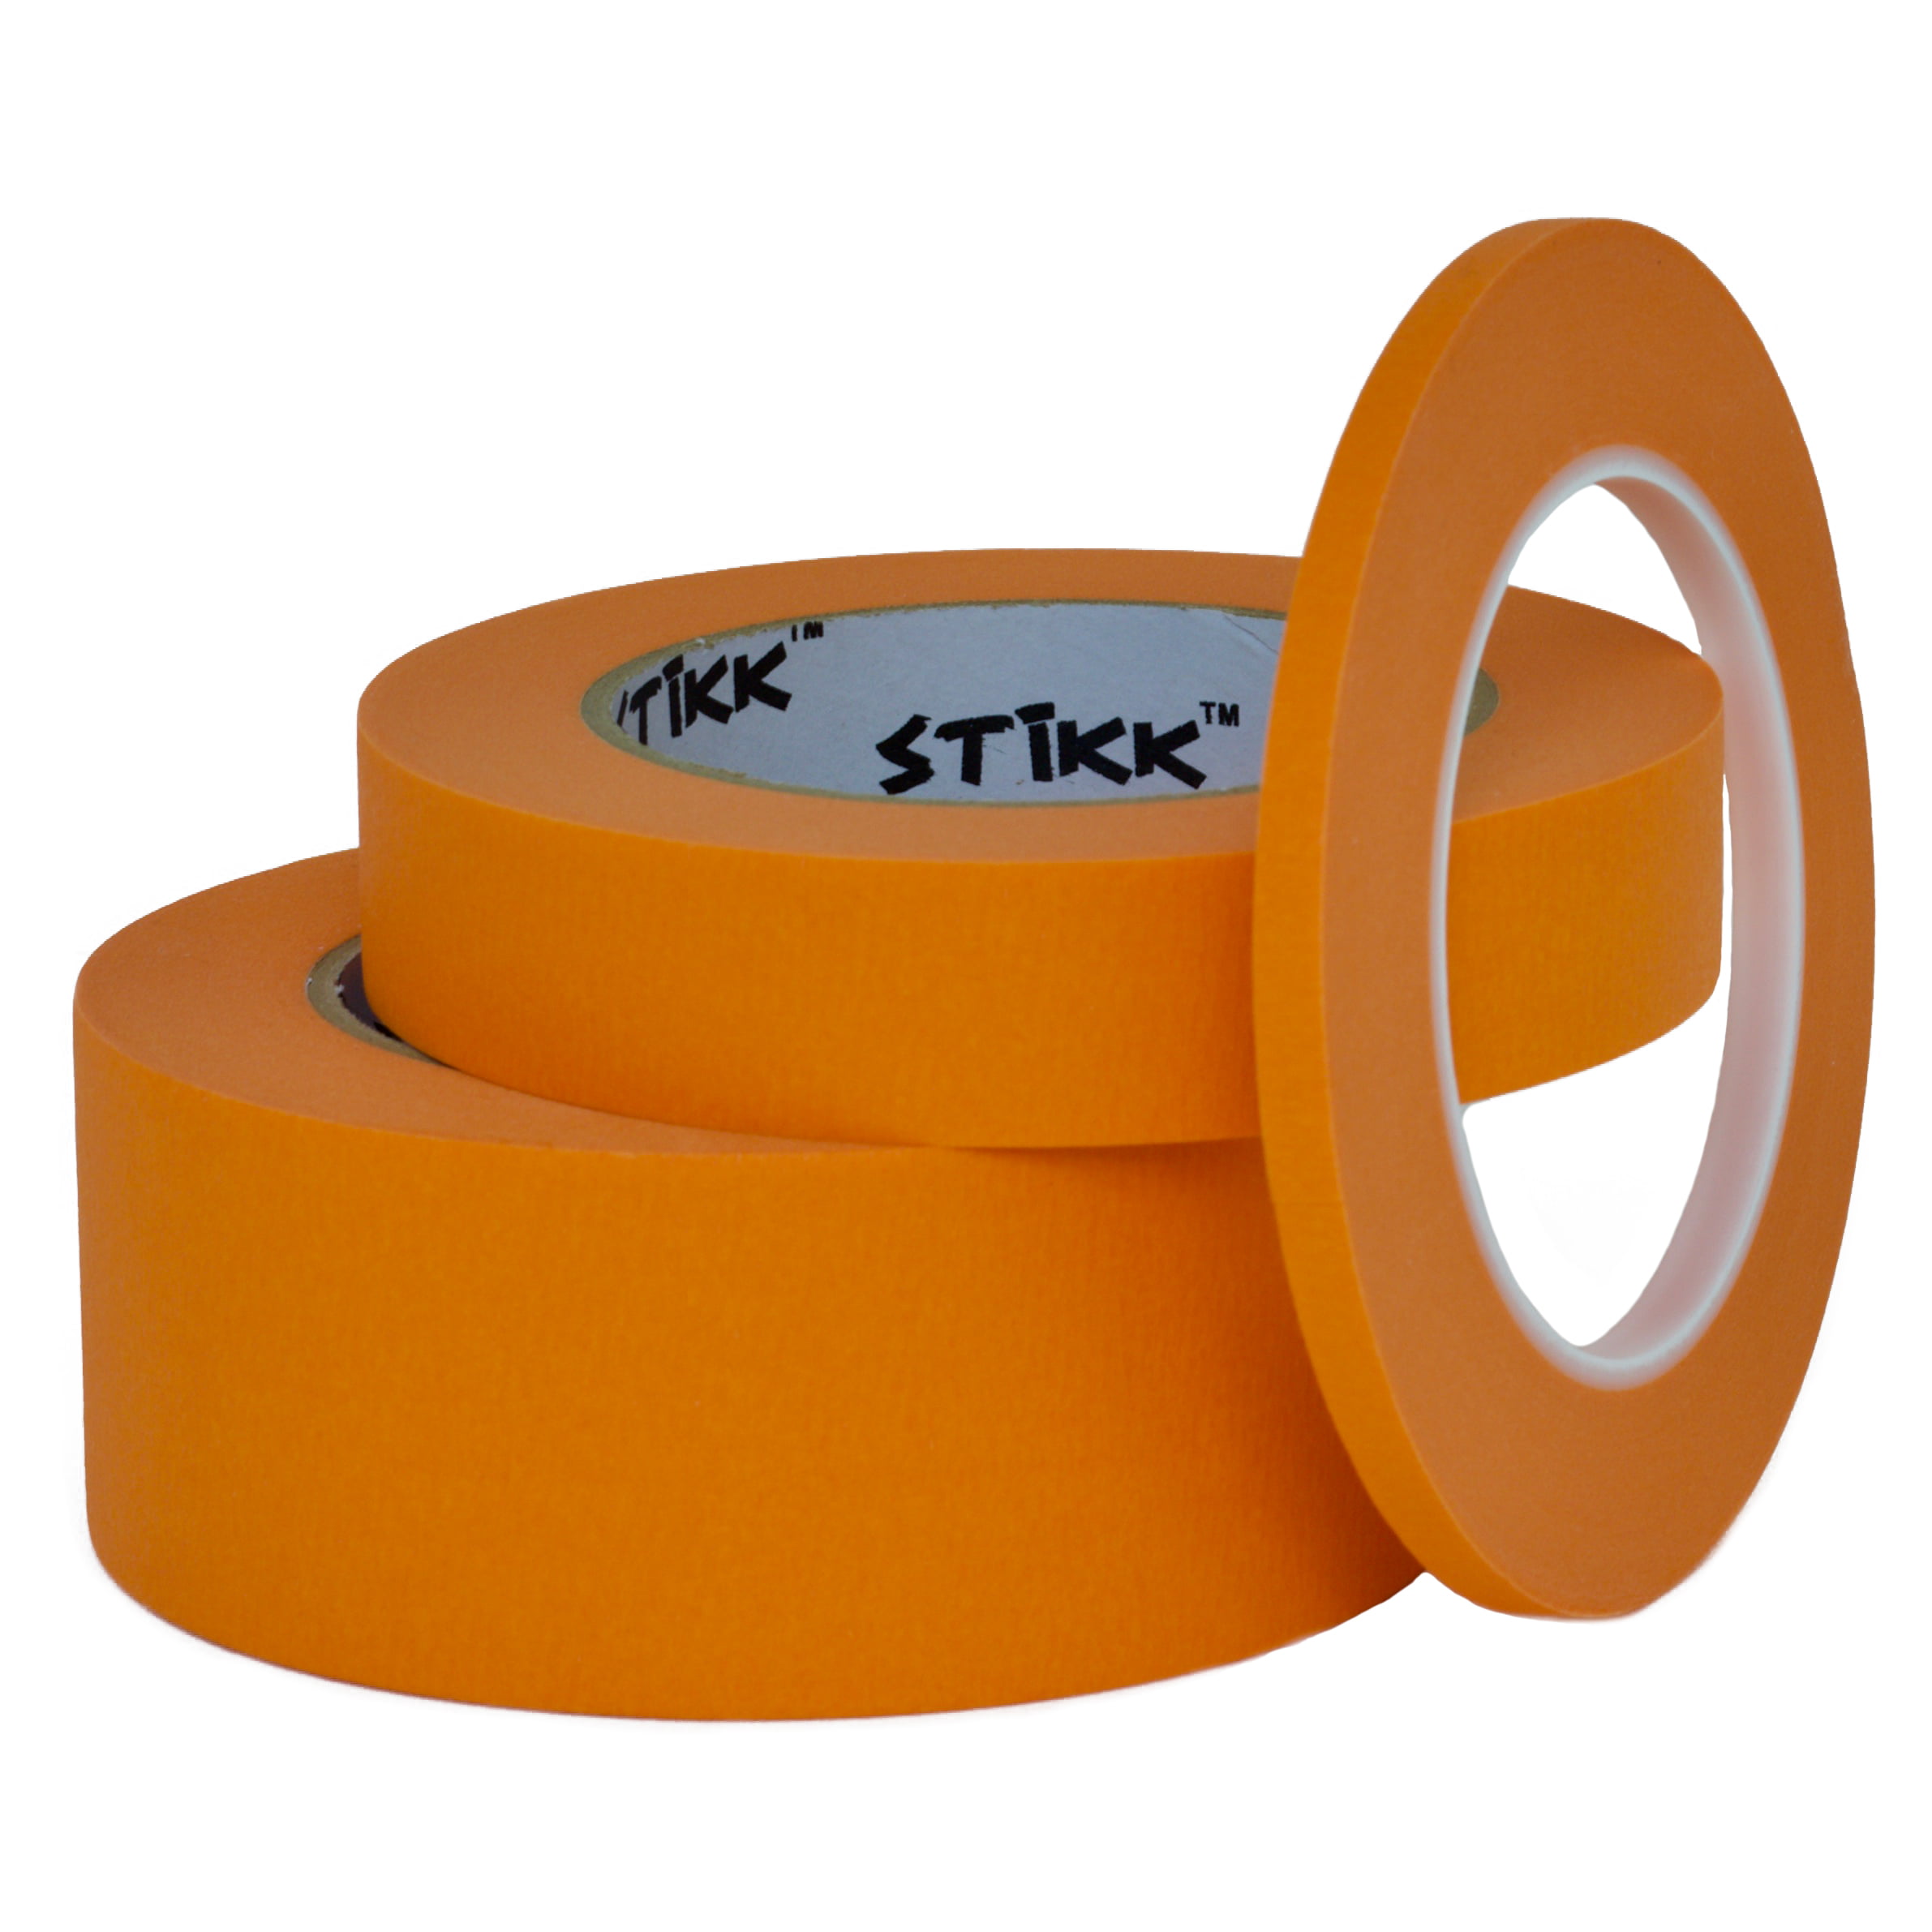 6mm x 55m 3 pack 1/4" .25 inch x 60yd Thin STIKK Yellow Painters Masking Tape 